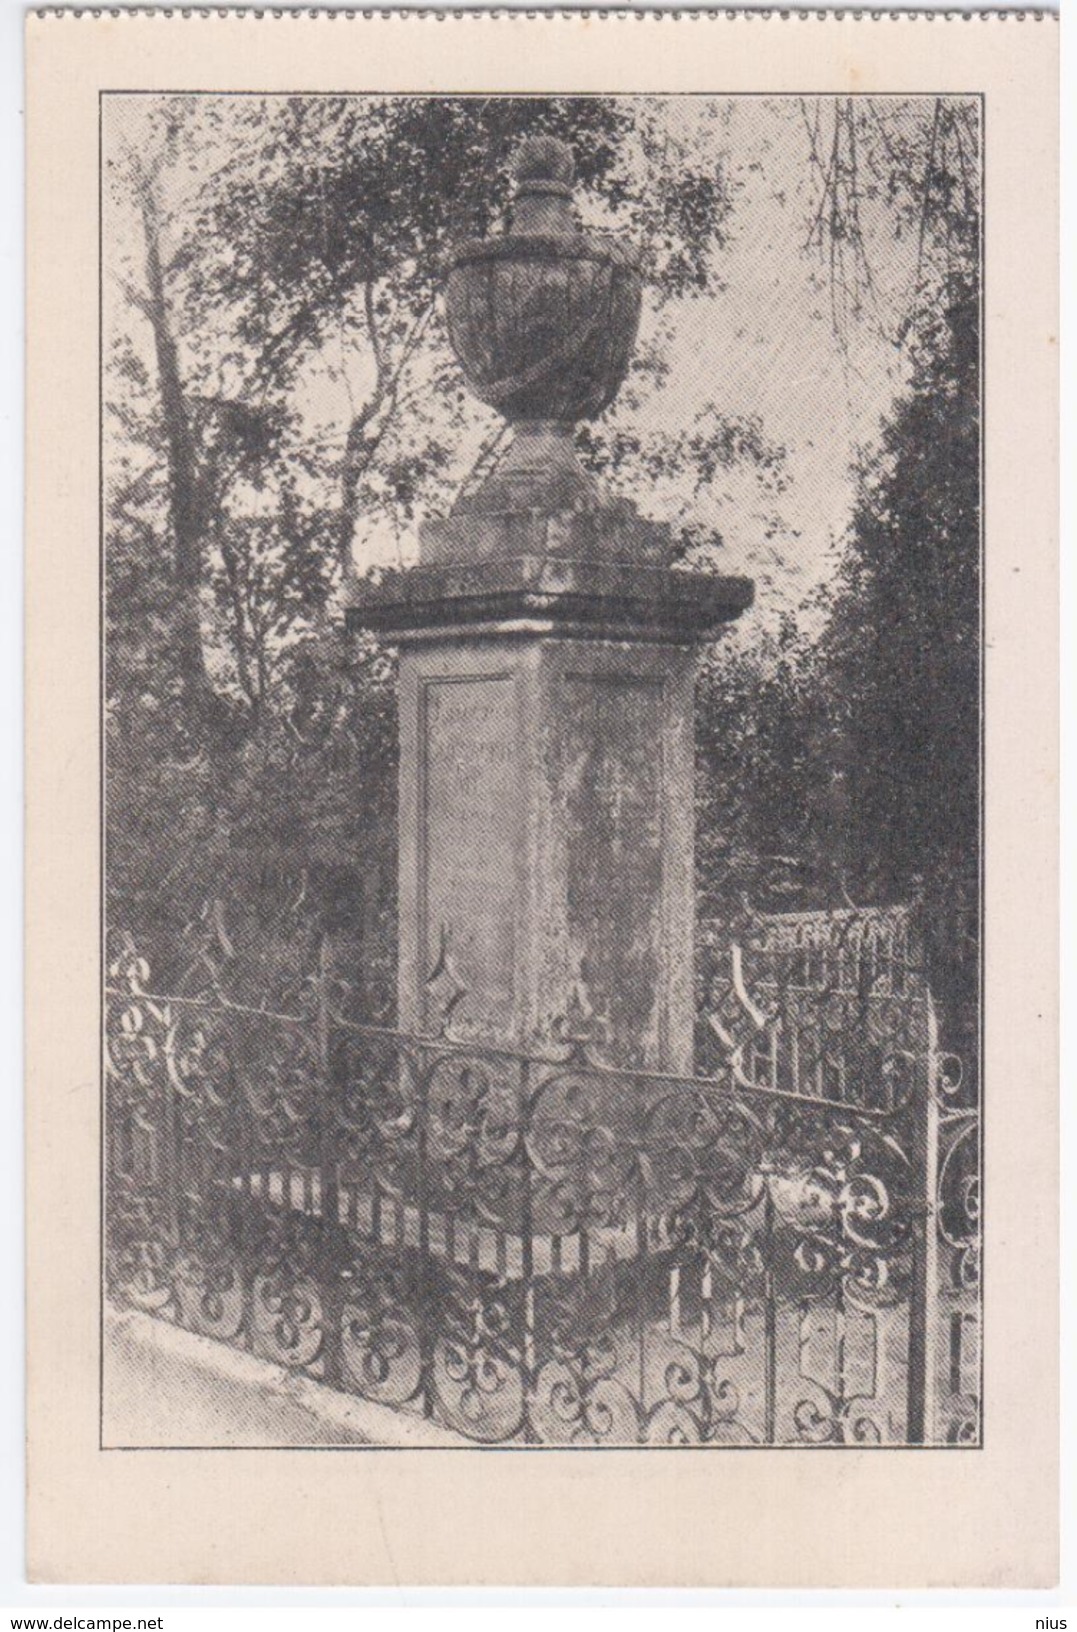 Ukraine Poland 1927 Kremenets Krzemieniec, Ternopil Oblast, Mother's Grave Of Juliusz Slowacki, Polish Romantic Poet - Poland